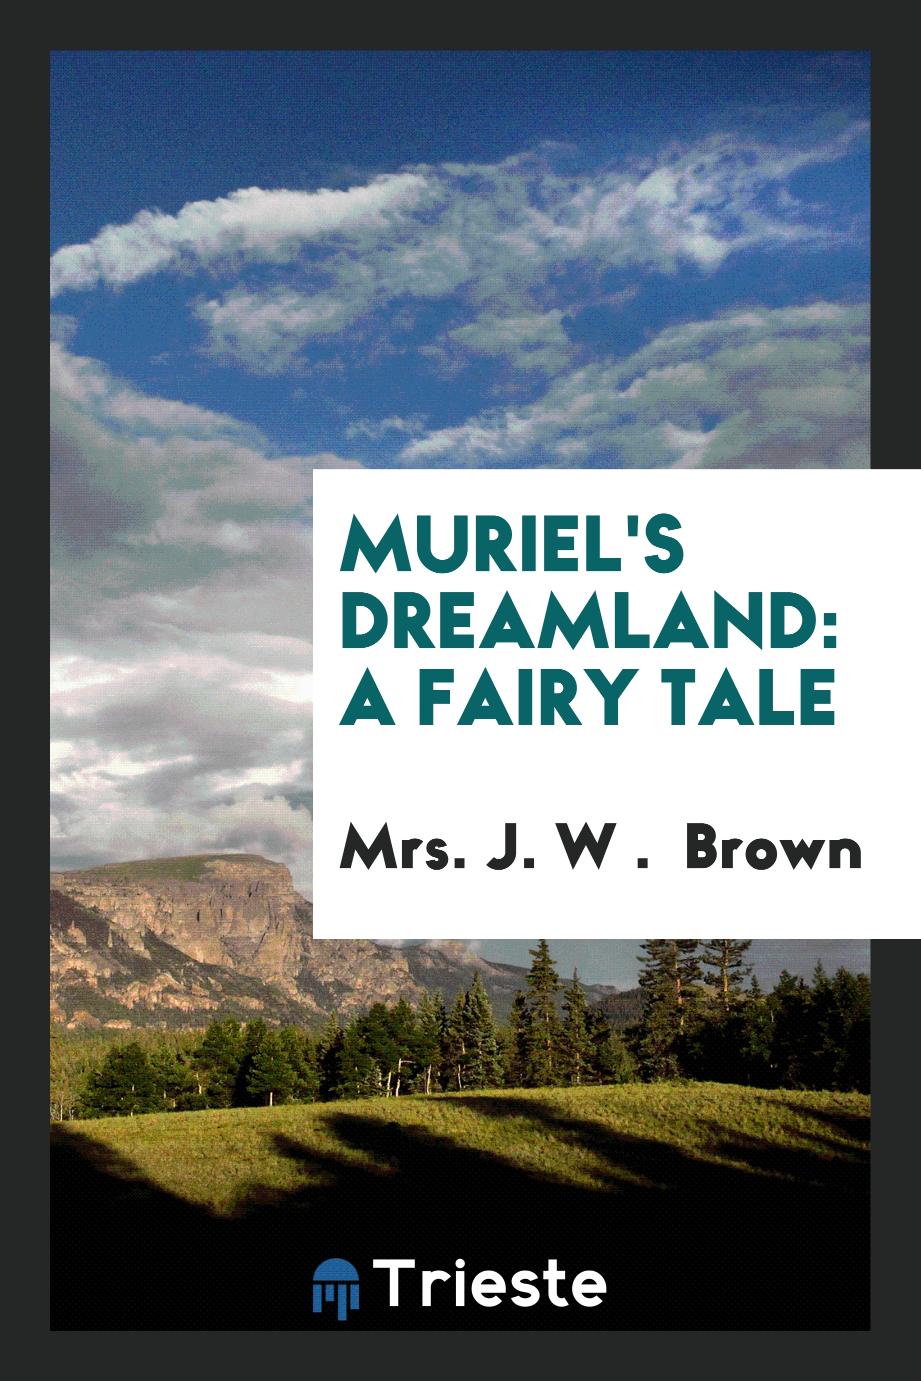 Muriel's Dreamland: A Fairy Tale